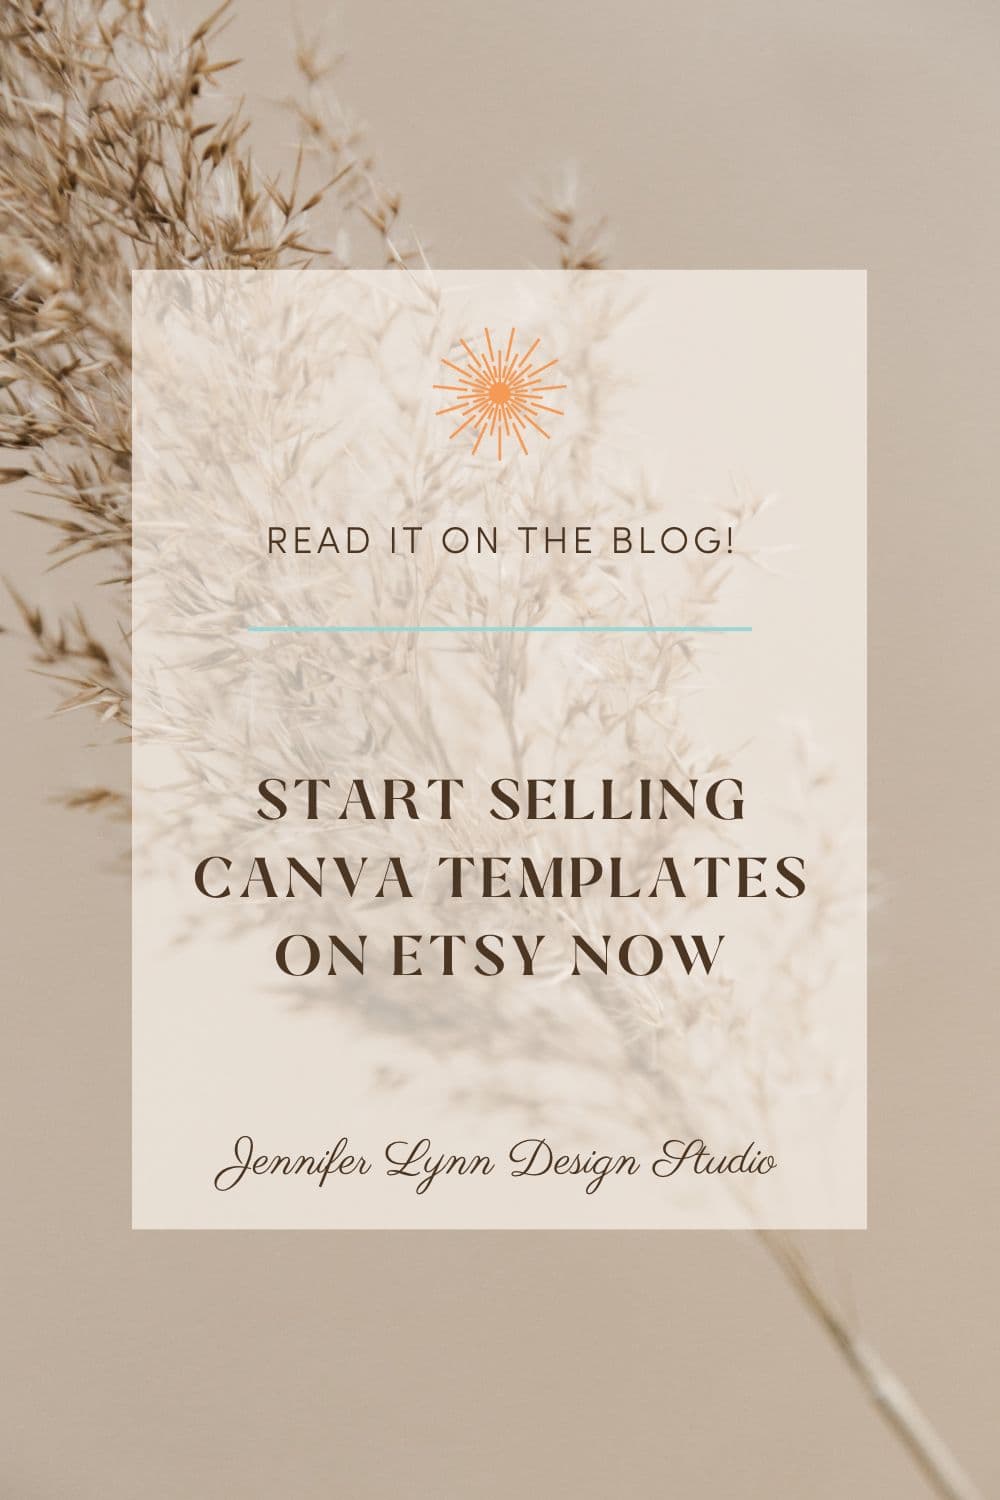 Start Selling Canva Templates on Etsy Now by Jennifer Lynn Design Studio